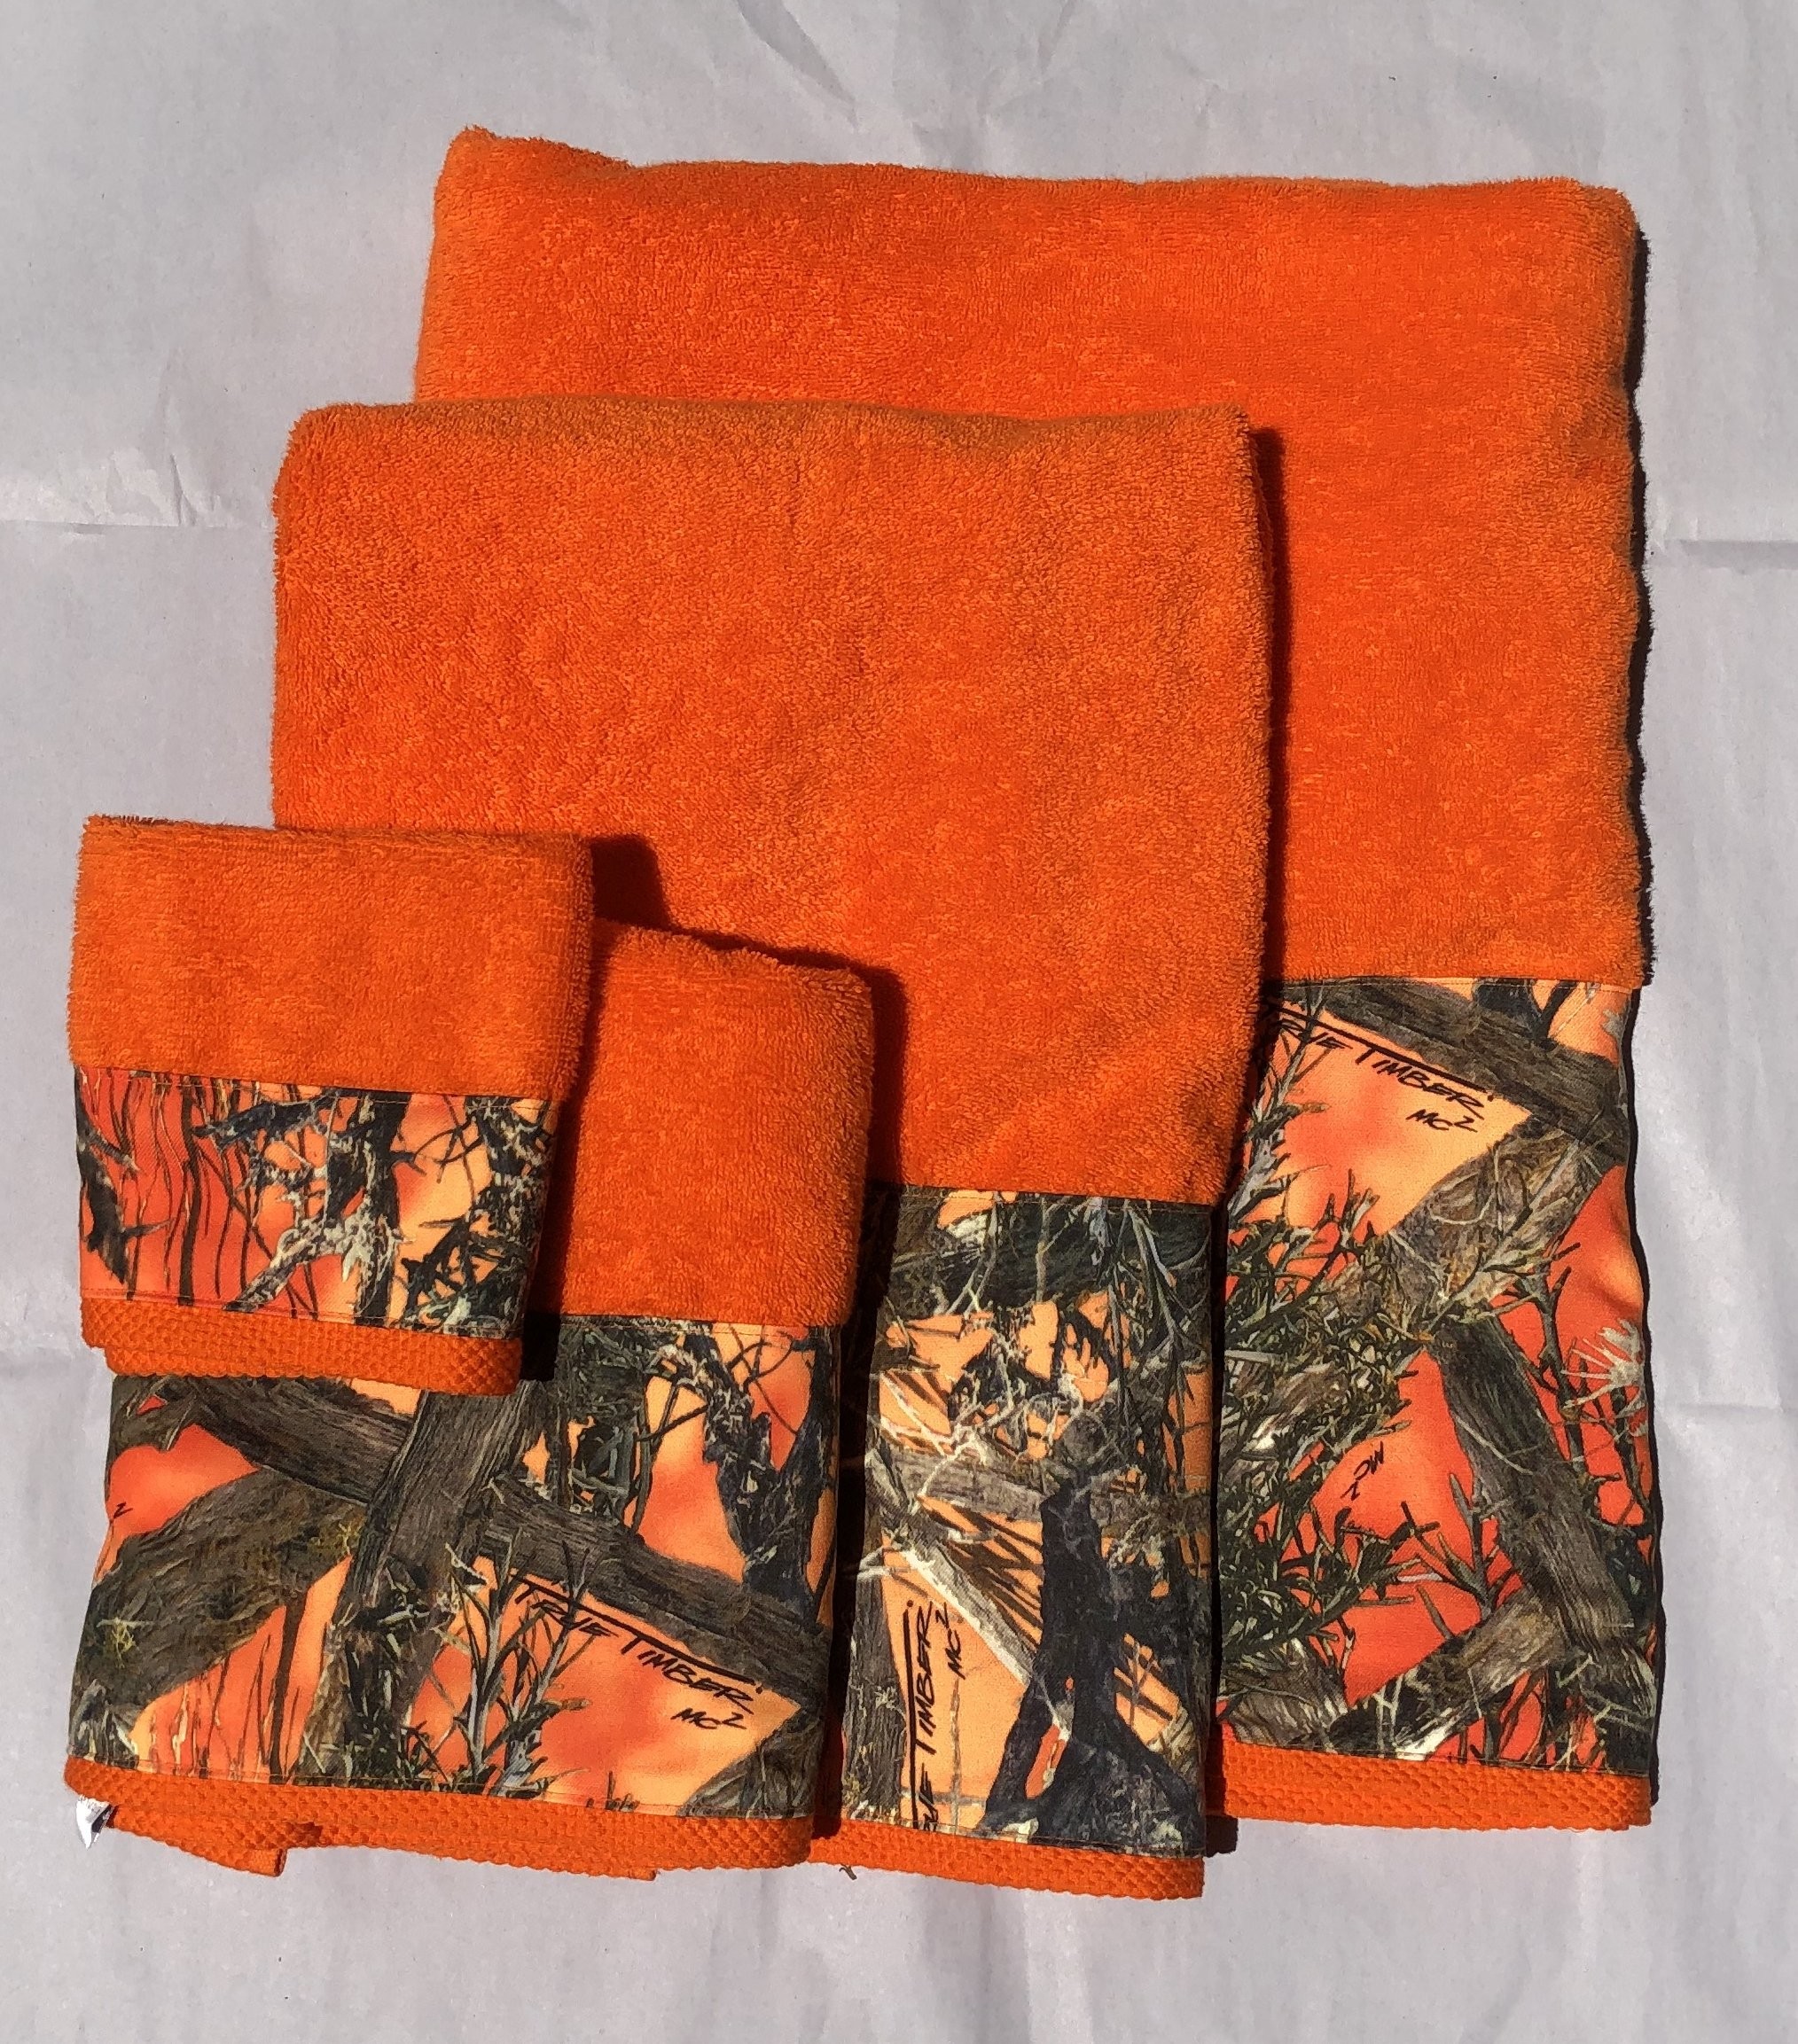 https://www.thecabinshop.com/media/catalog/product/cache/1/image/9df78eab33525d08d6e5fb8d27136e95/c/a/camo-towels.jpg